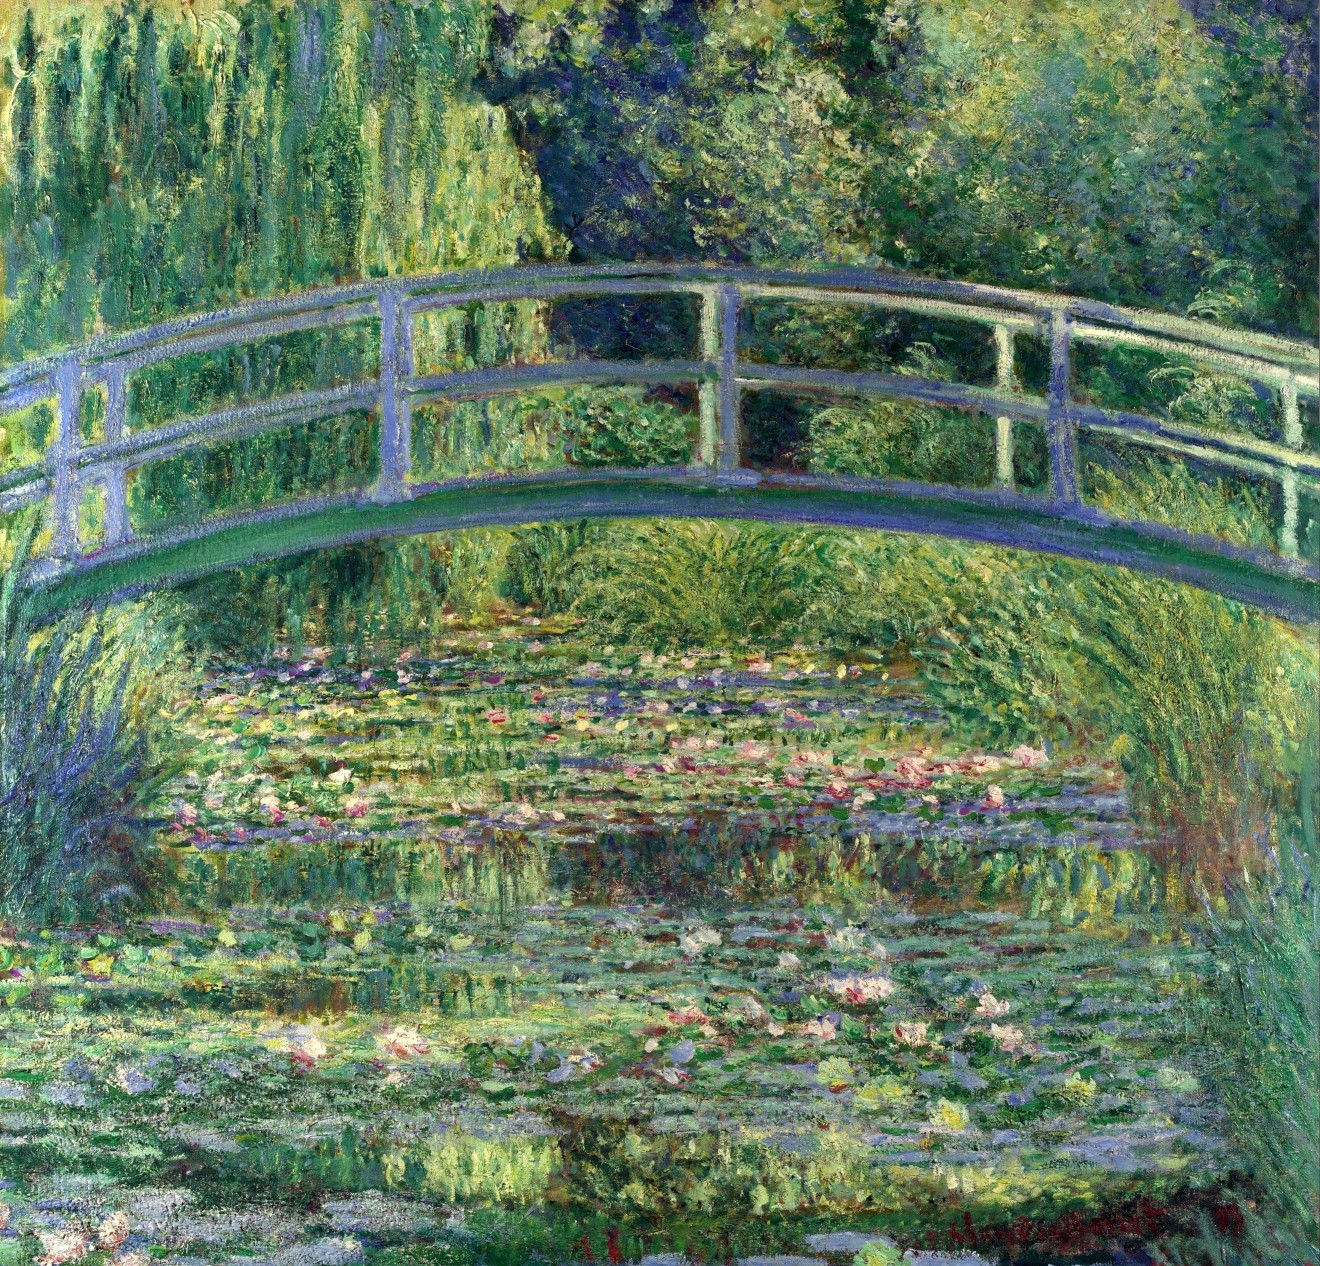 Claude+Monet-1840-1926 (404).jpg